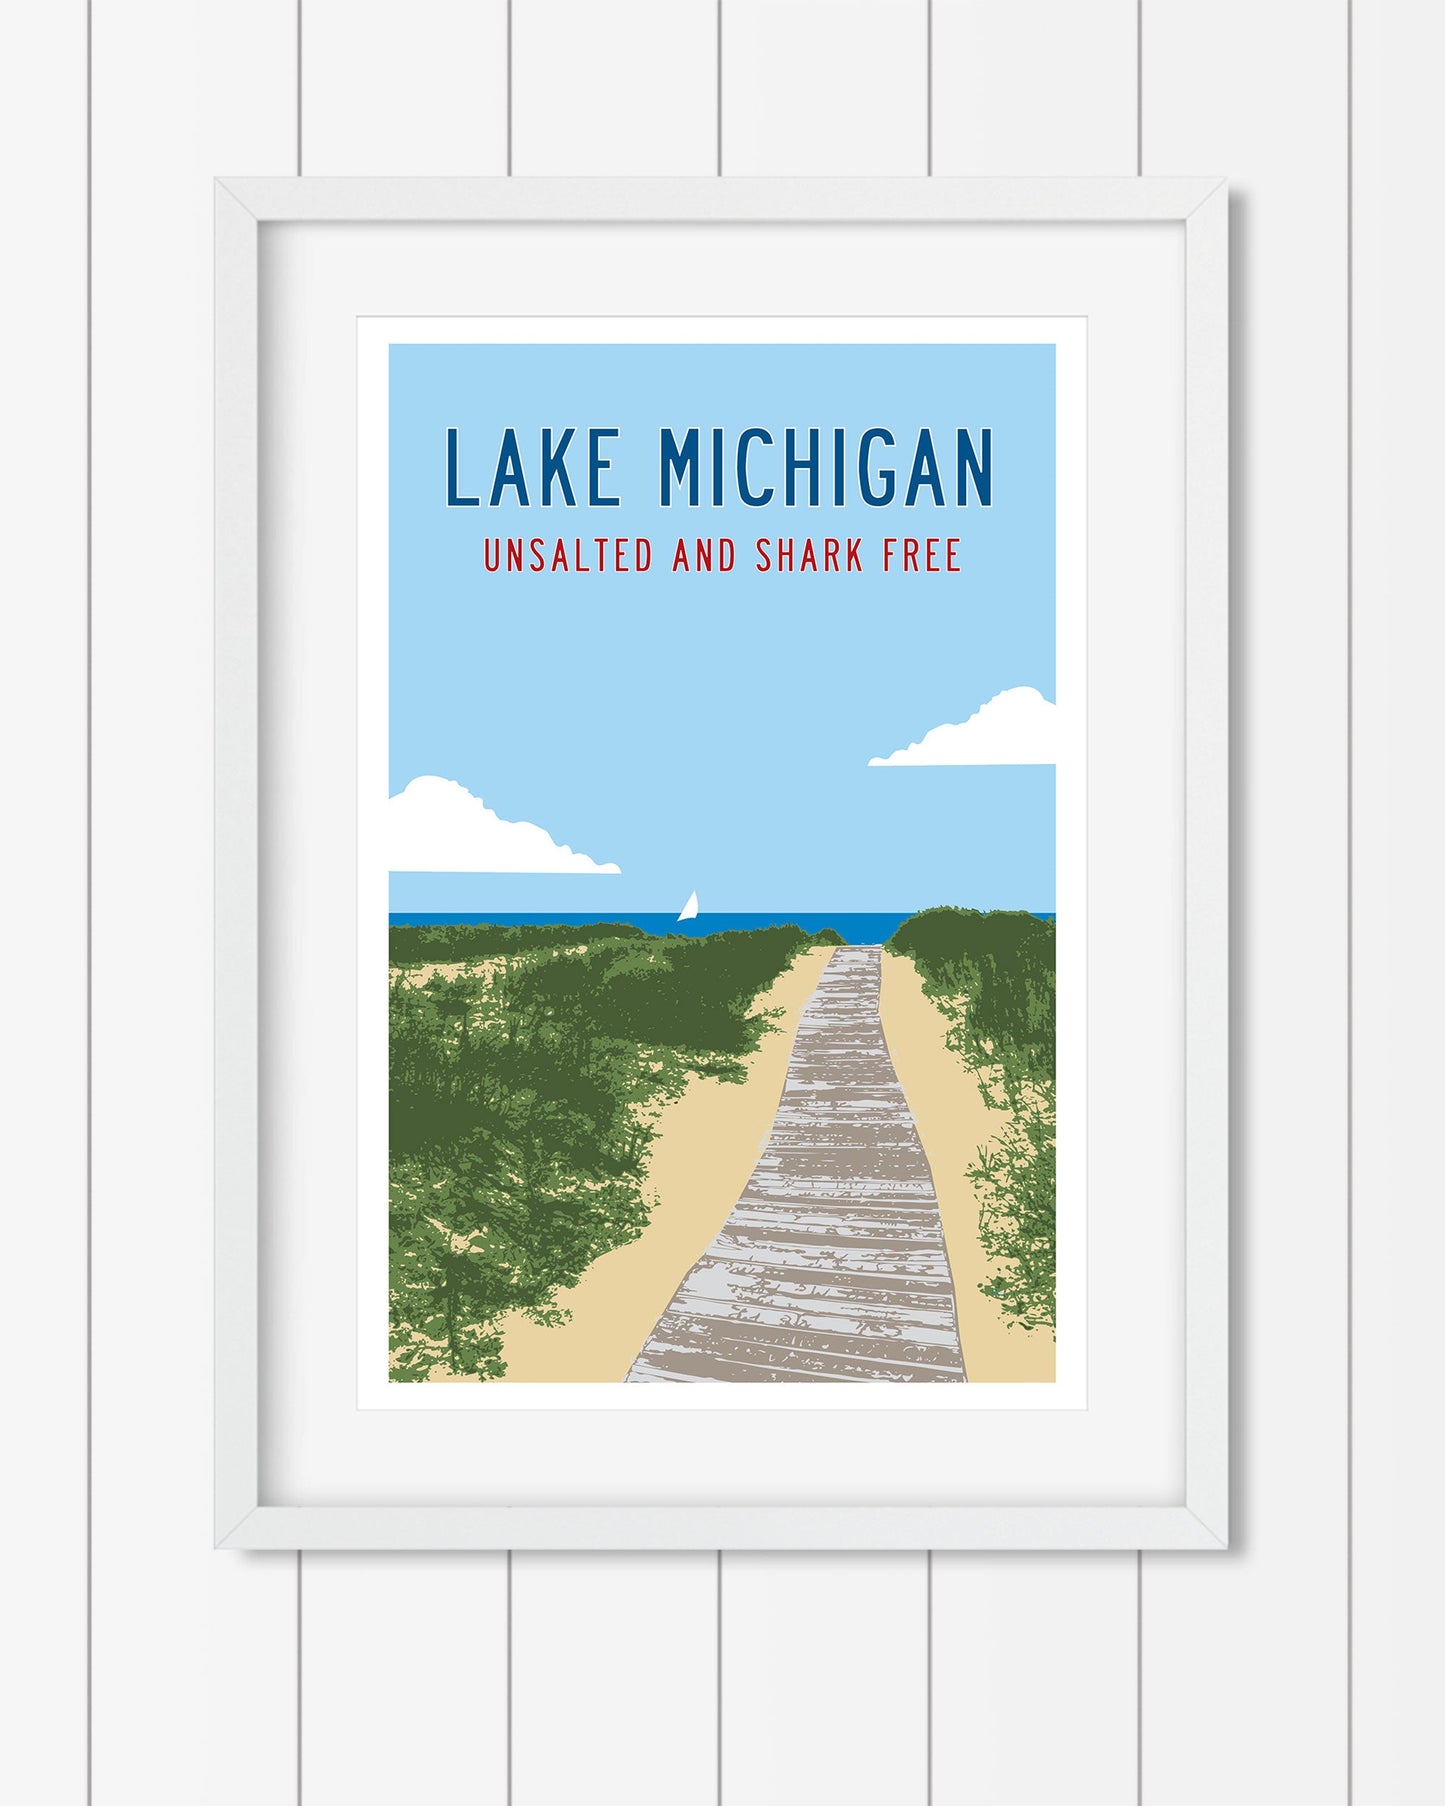 Lake Michigan Poster Art with Beach, Unsalted Shark Free - Transit Design